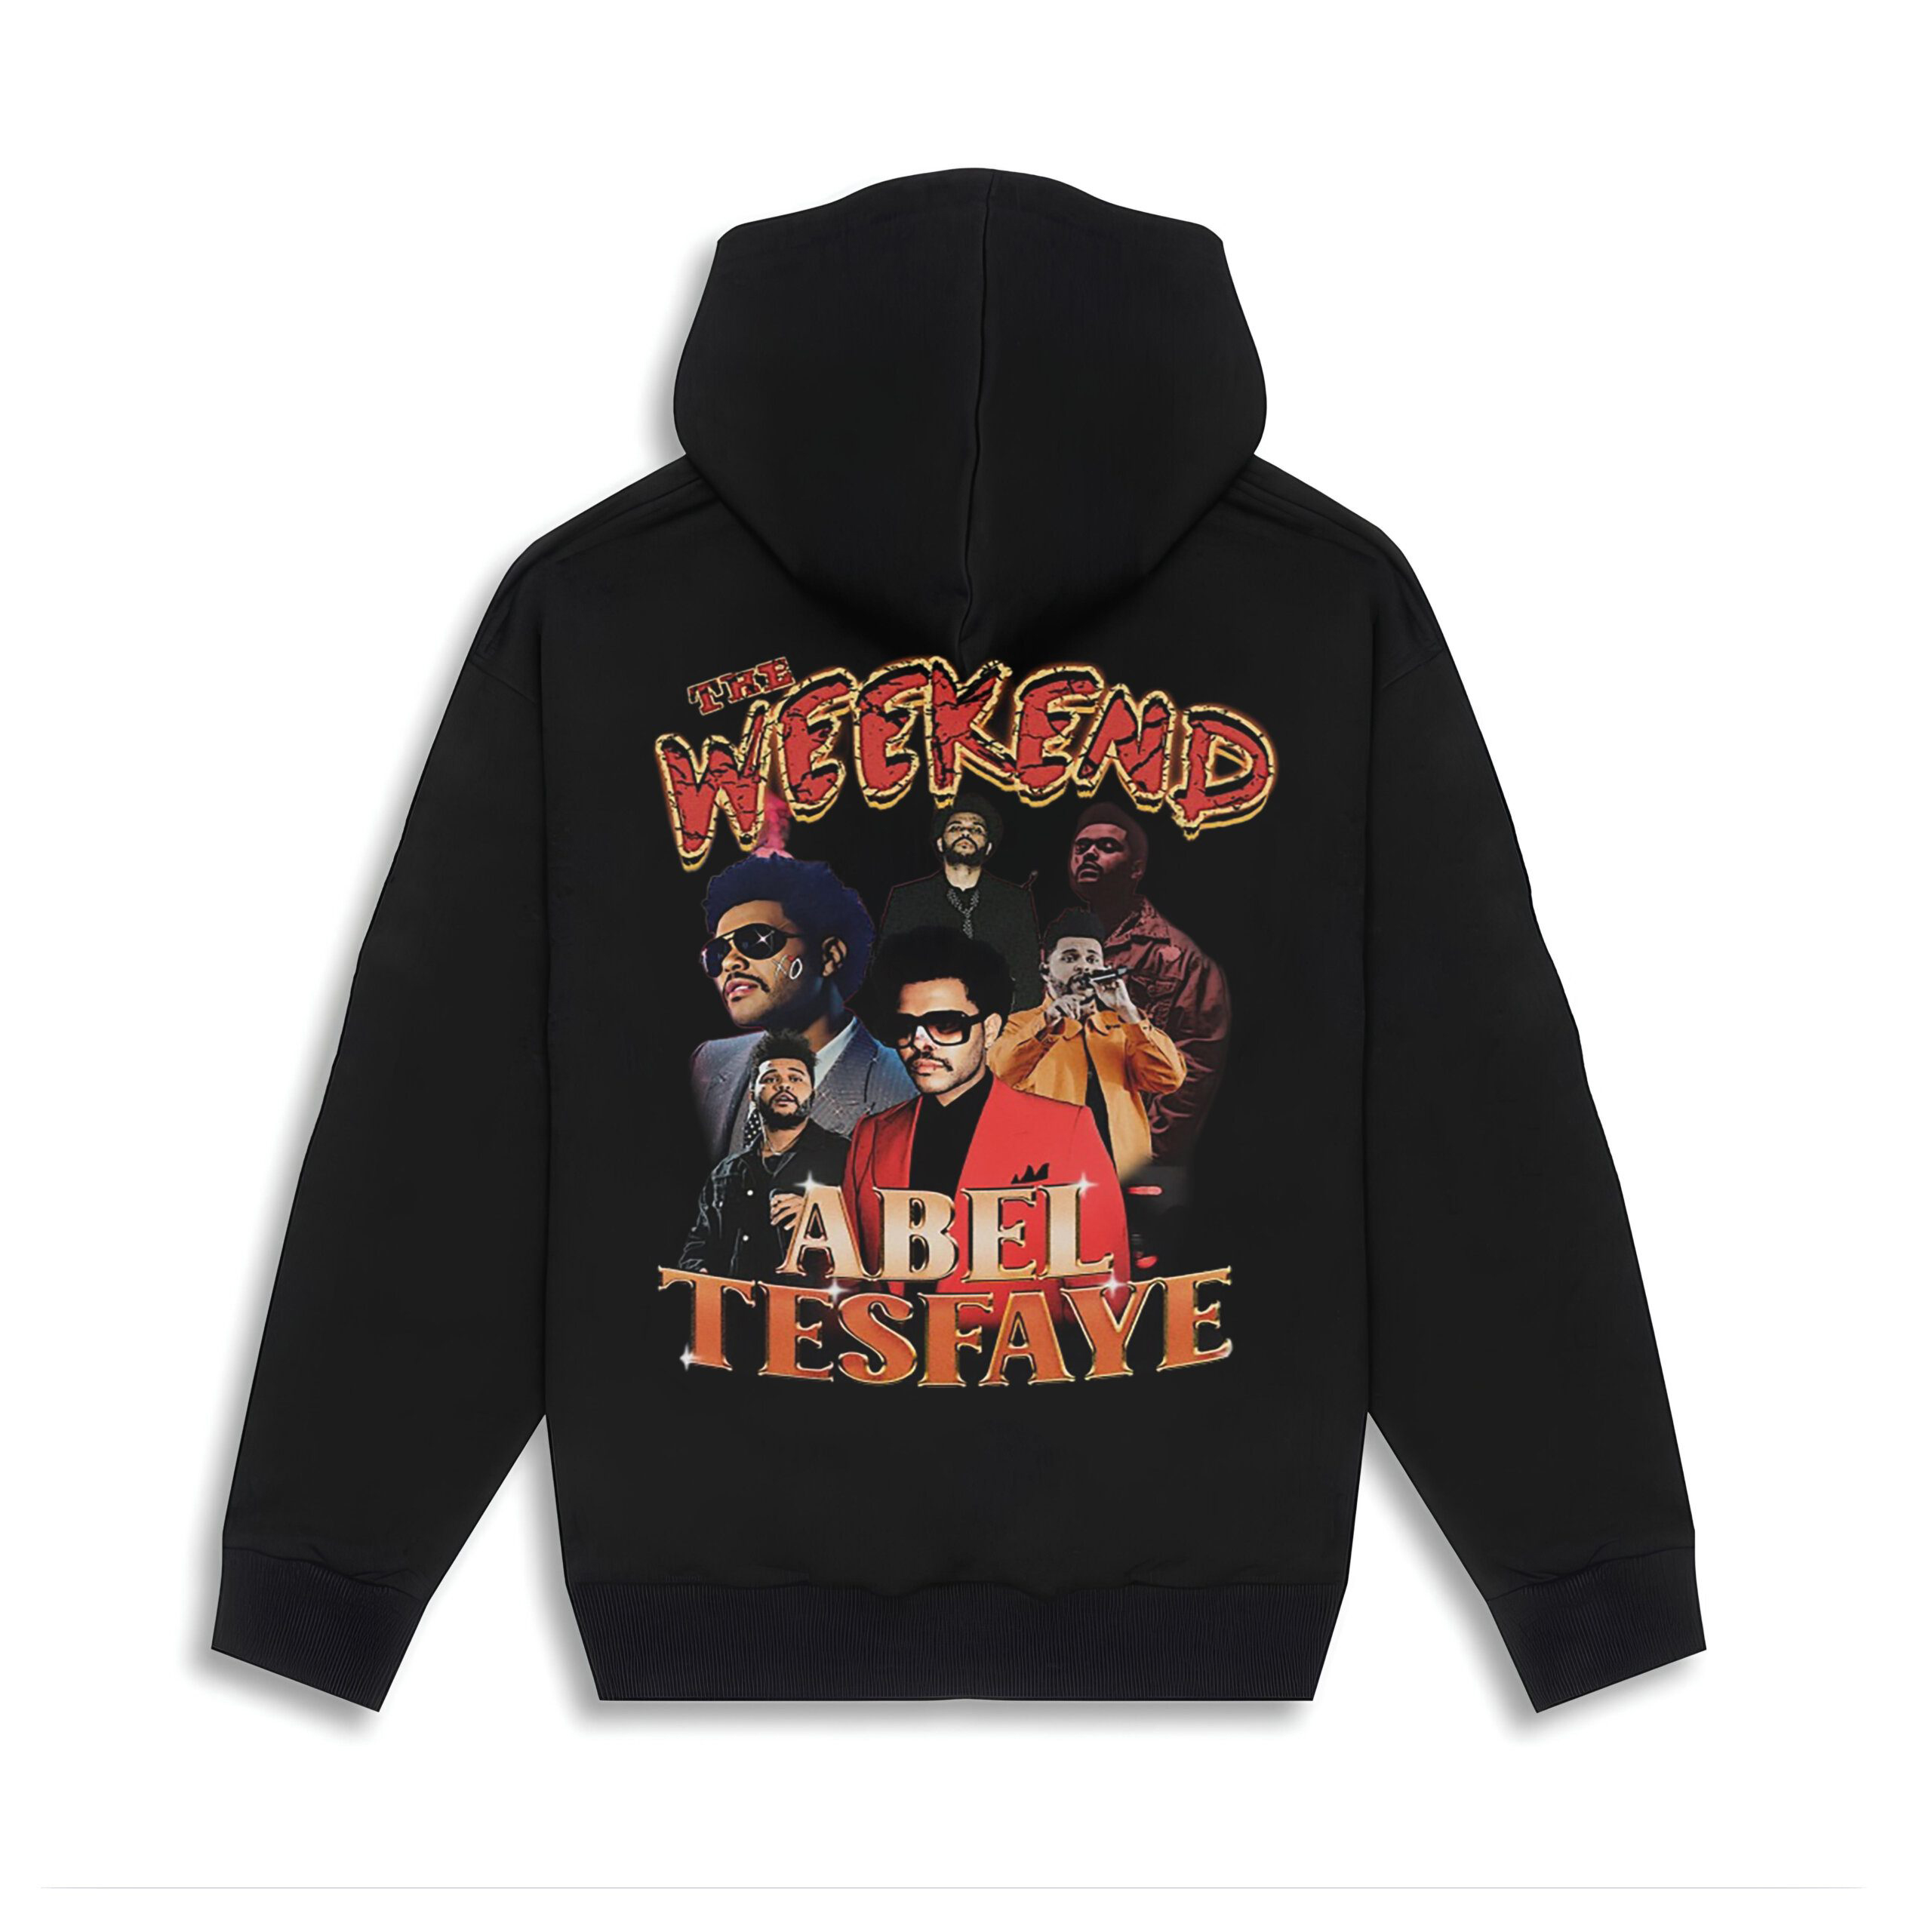 The Weeknd Hoodie | Swag Shirts